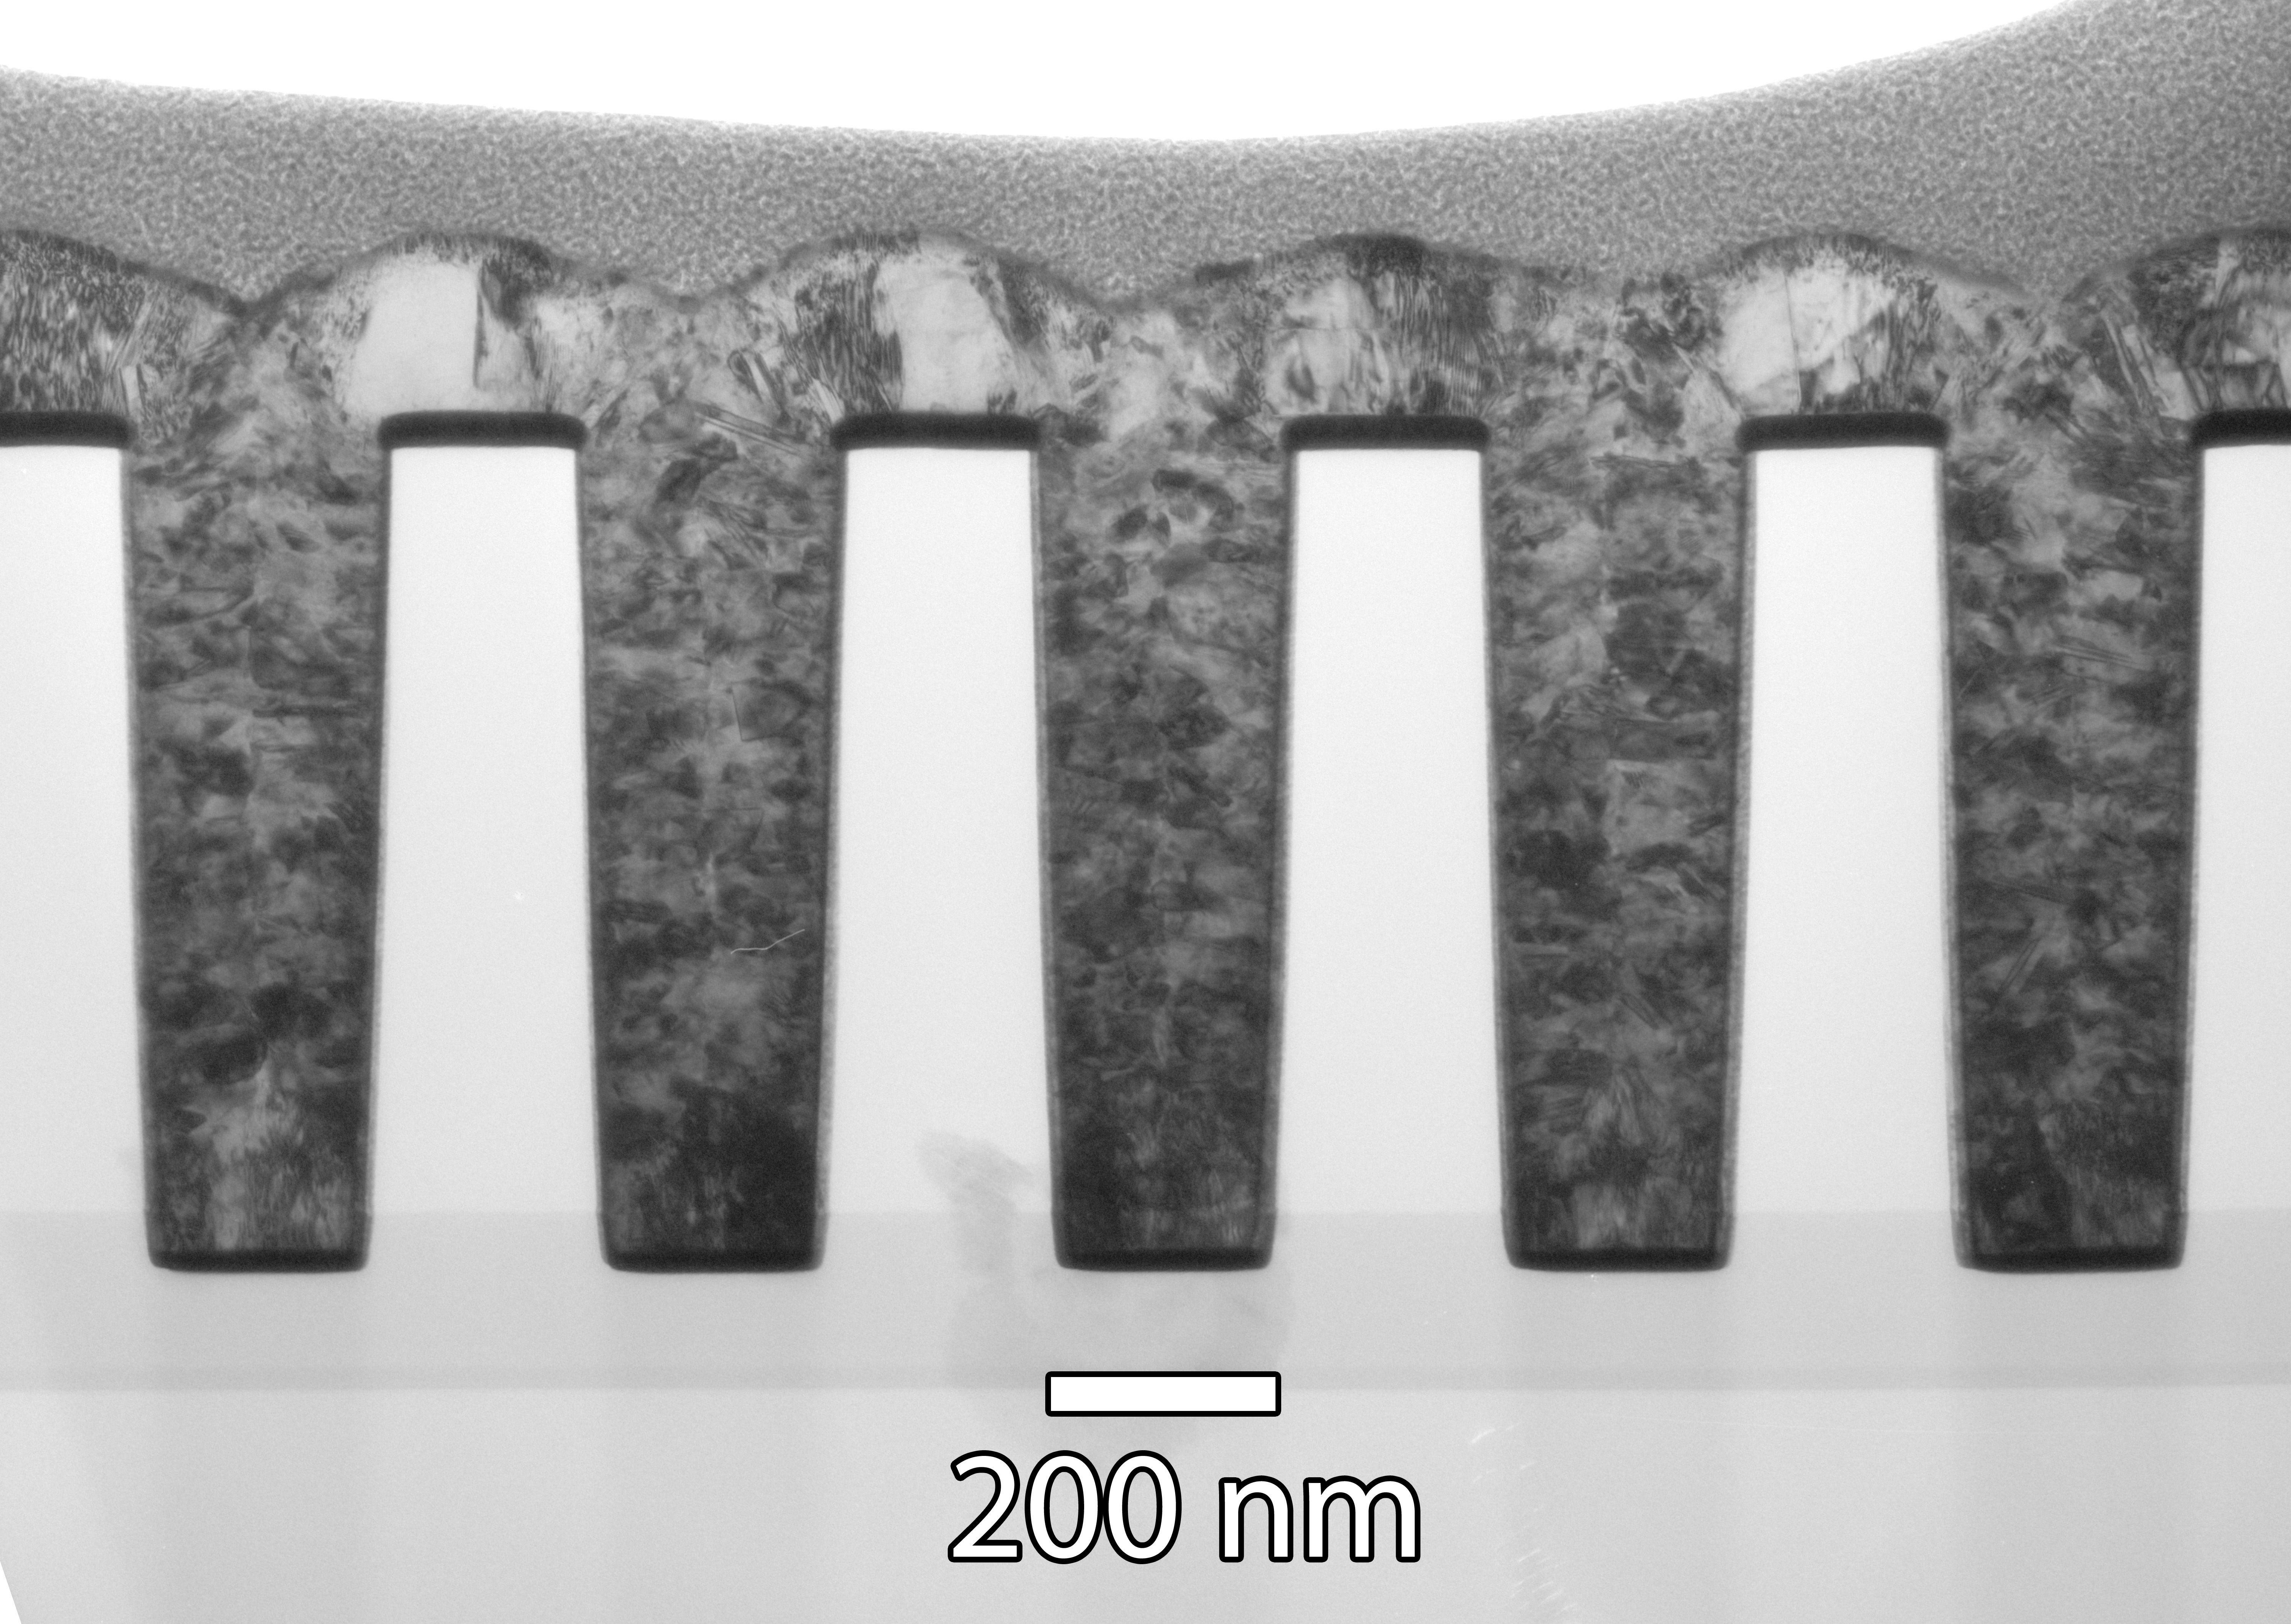 Nanostructure Fabrication TEM image